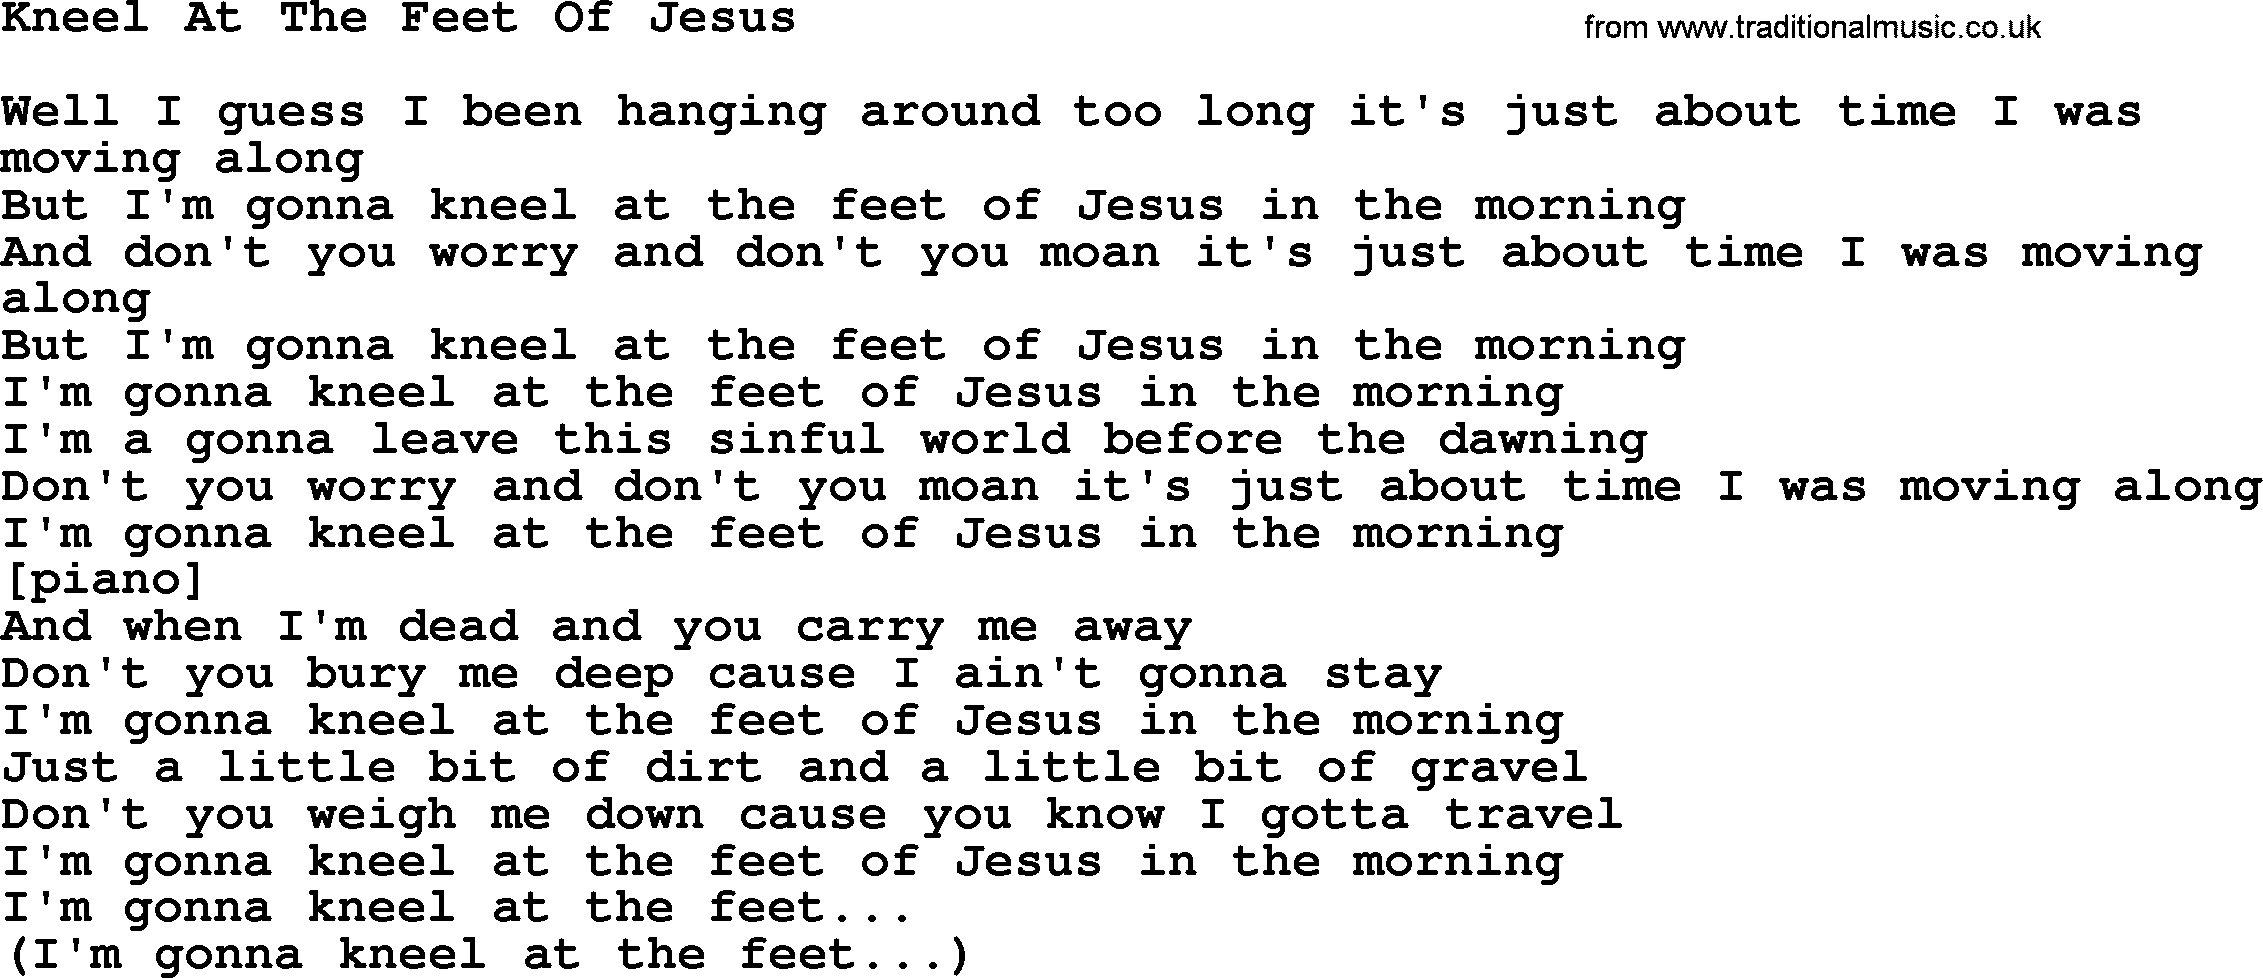 Willie Nelson song: Kneel At The Feet Of Jesus lyrics